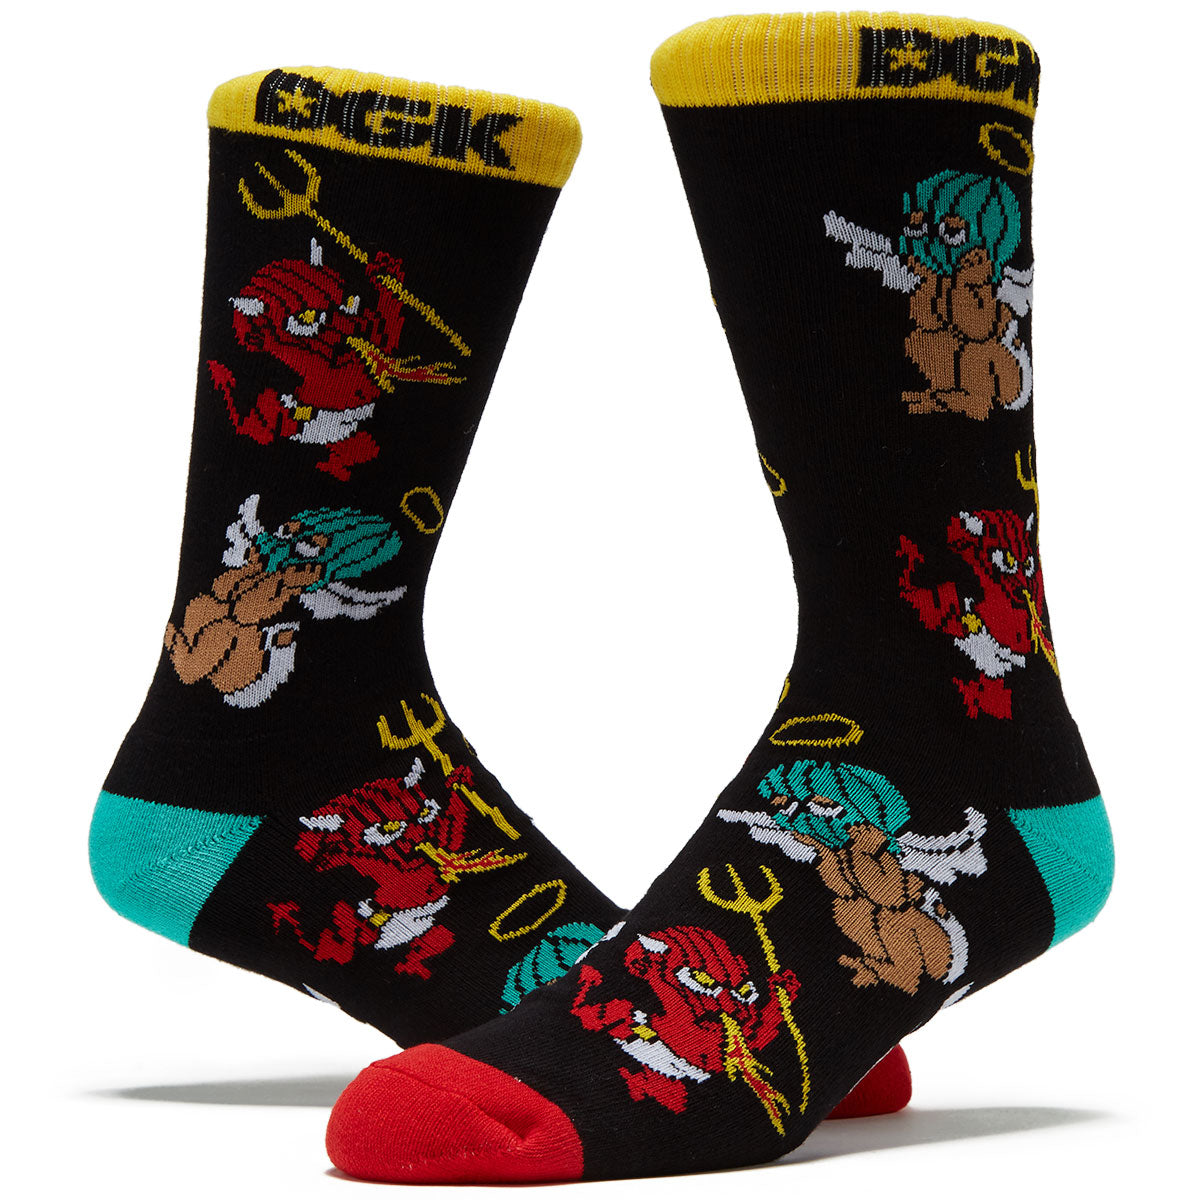 DGK Crazy Life Socks - Black image 2